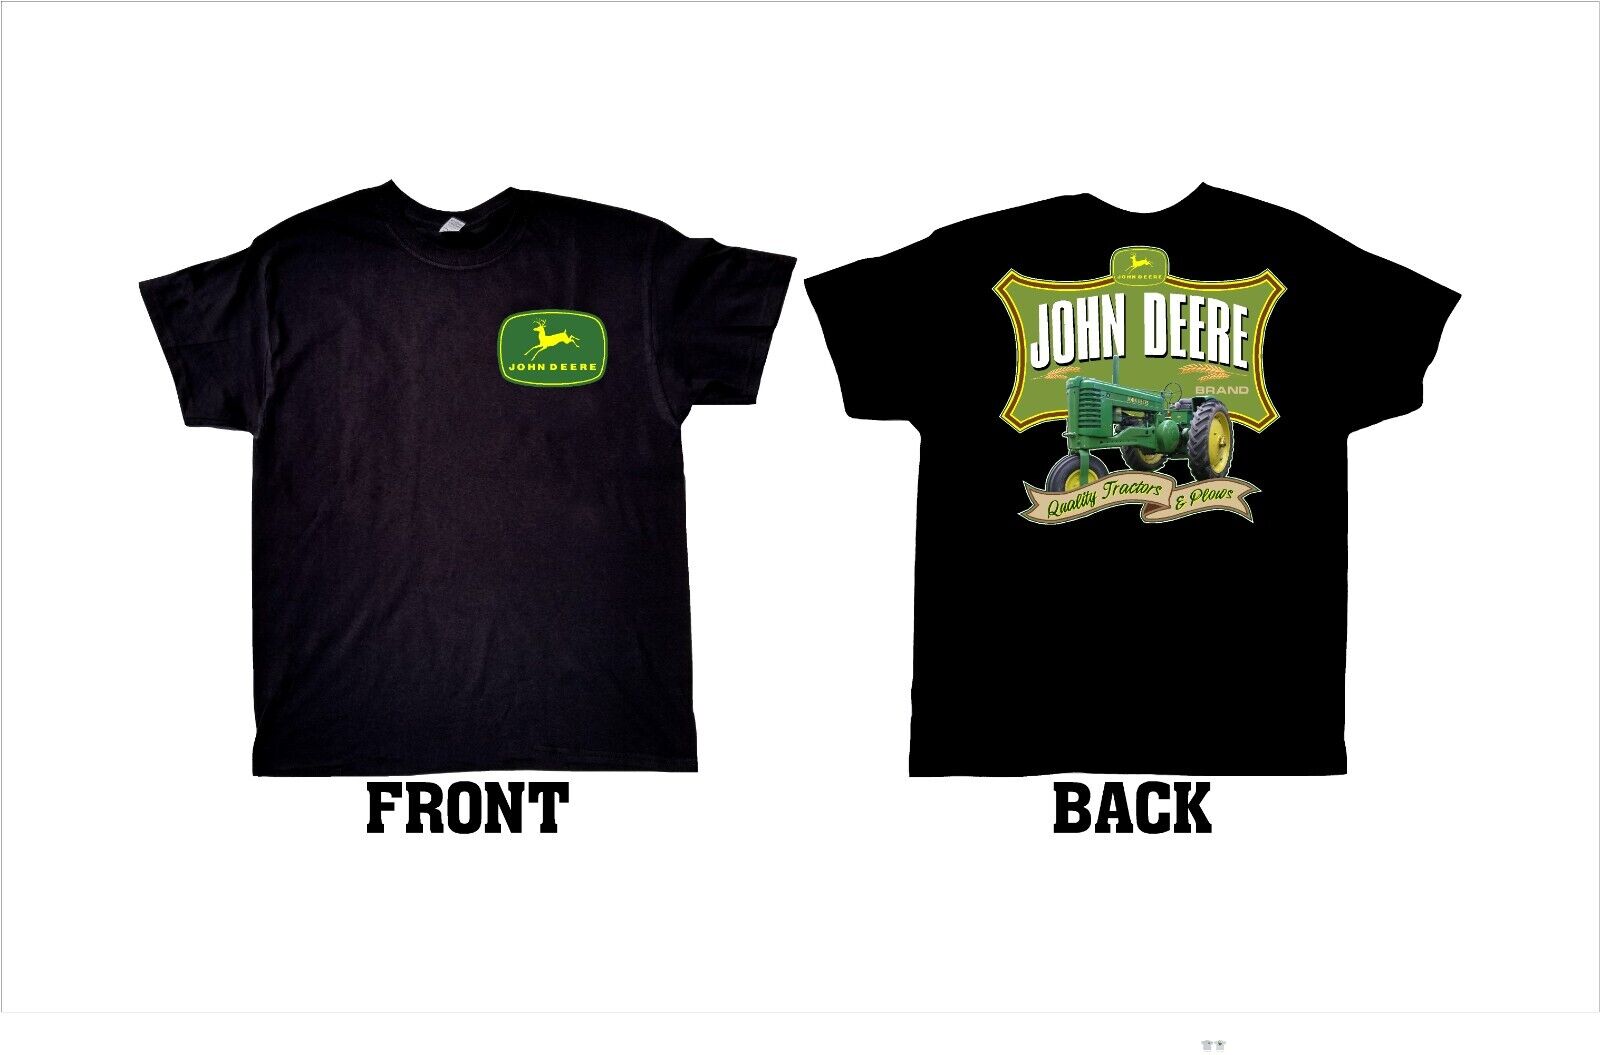 John Deere Quality Tractors & Plows Vintage Recreated Tee Shirt - Tee Shirt